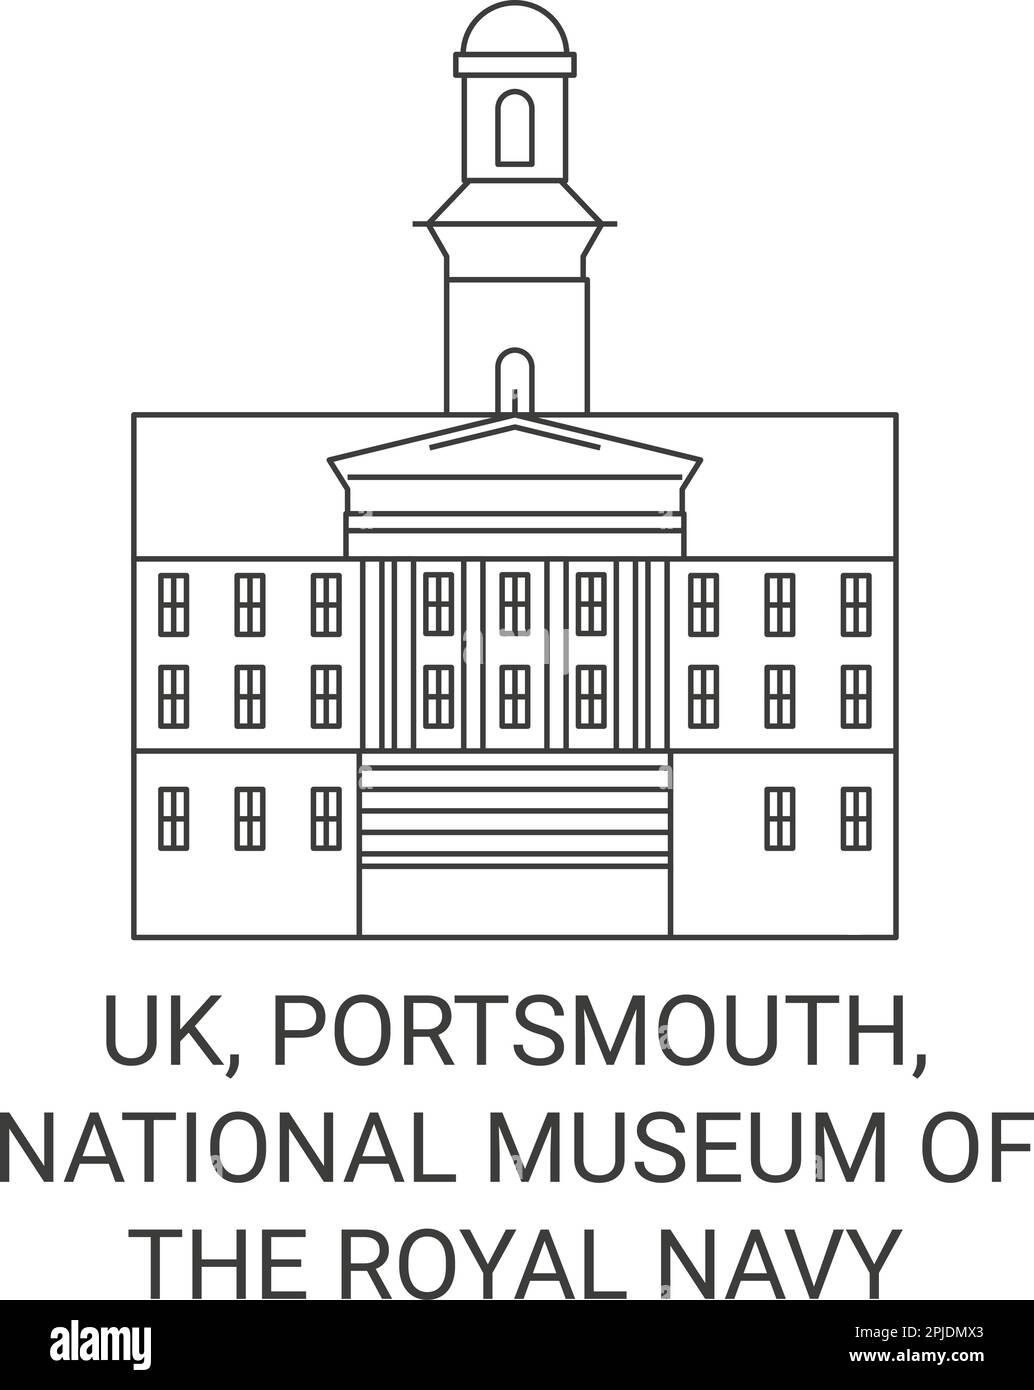 England, Portsmouth, National Museum Of The Royal Navy travel landmark vector illustration Stock Vector